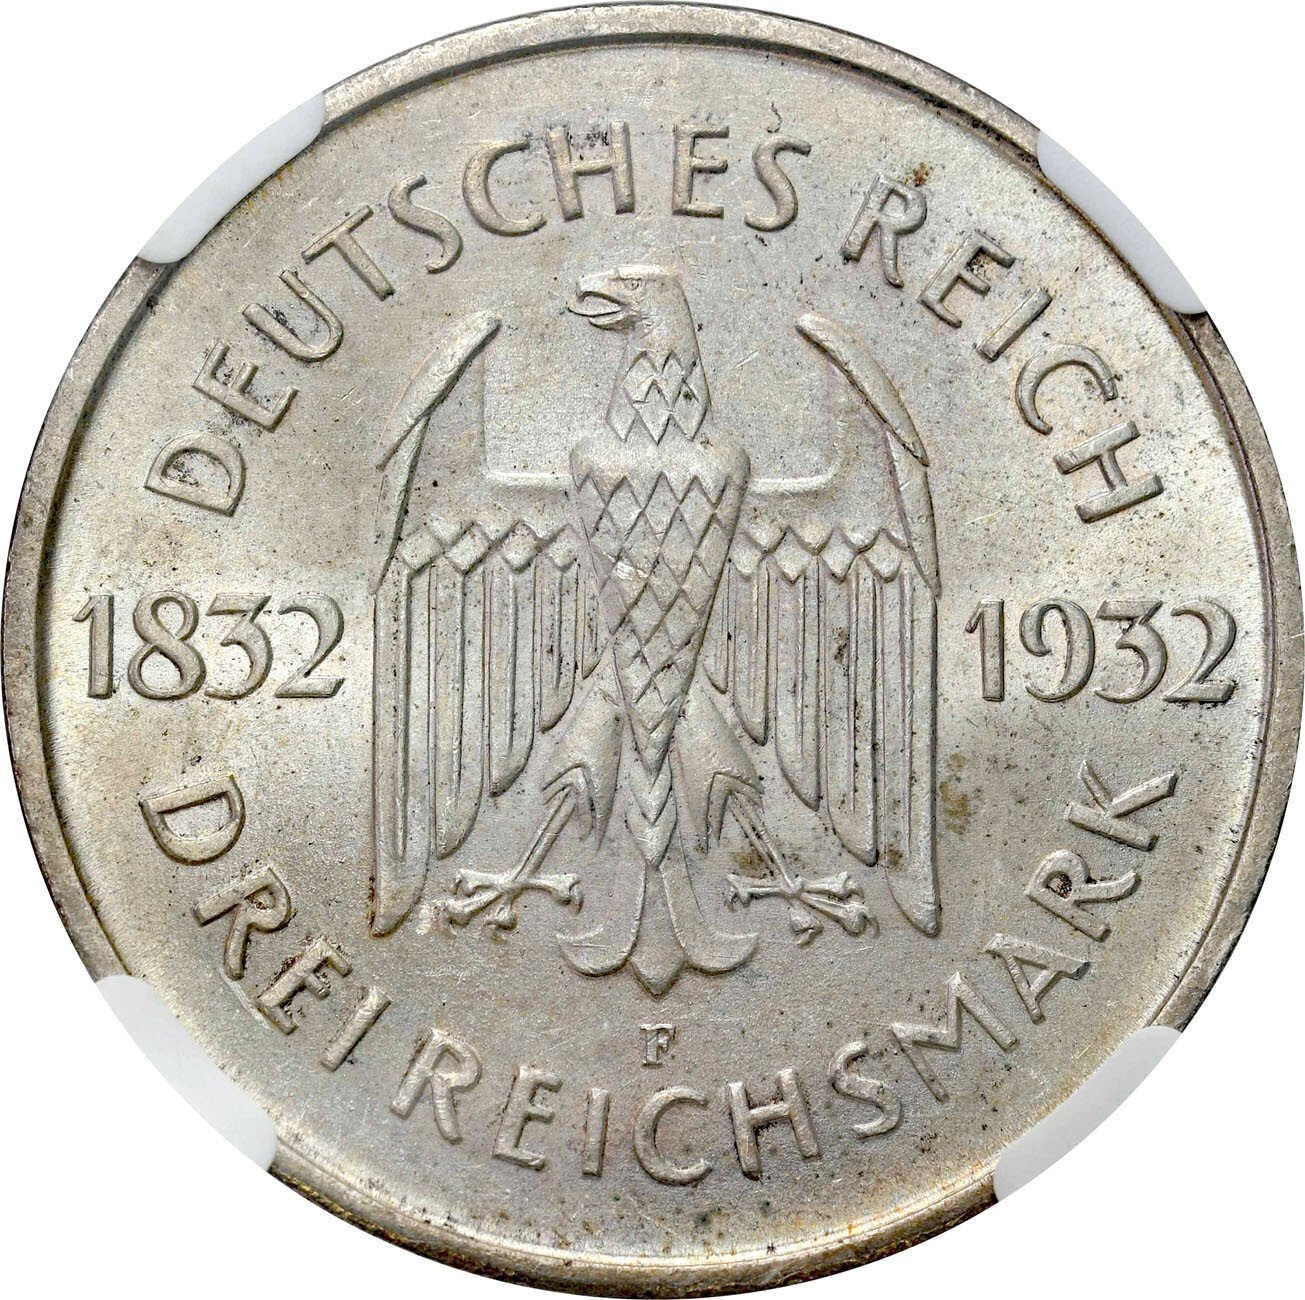 Niemcy, Weimar. 3 Marki 1932 Goethe F, Stuttgart NGC MS64 - PIĘKNE